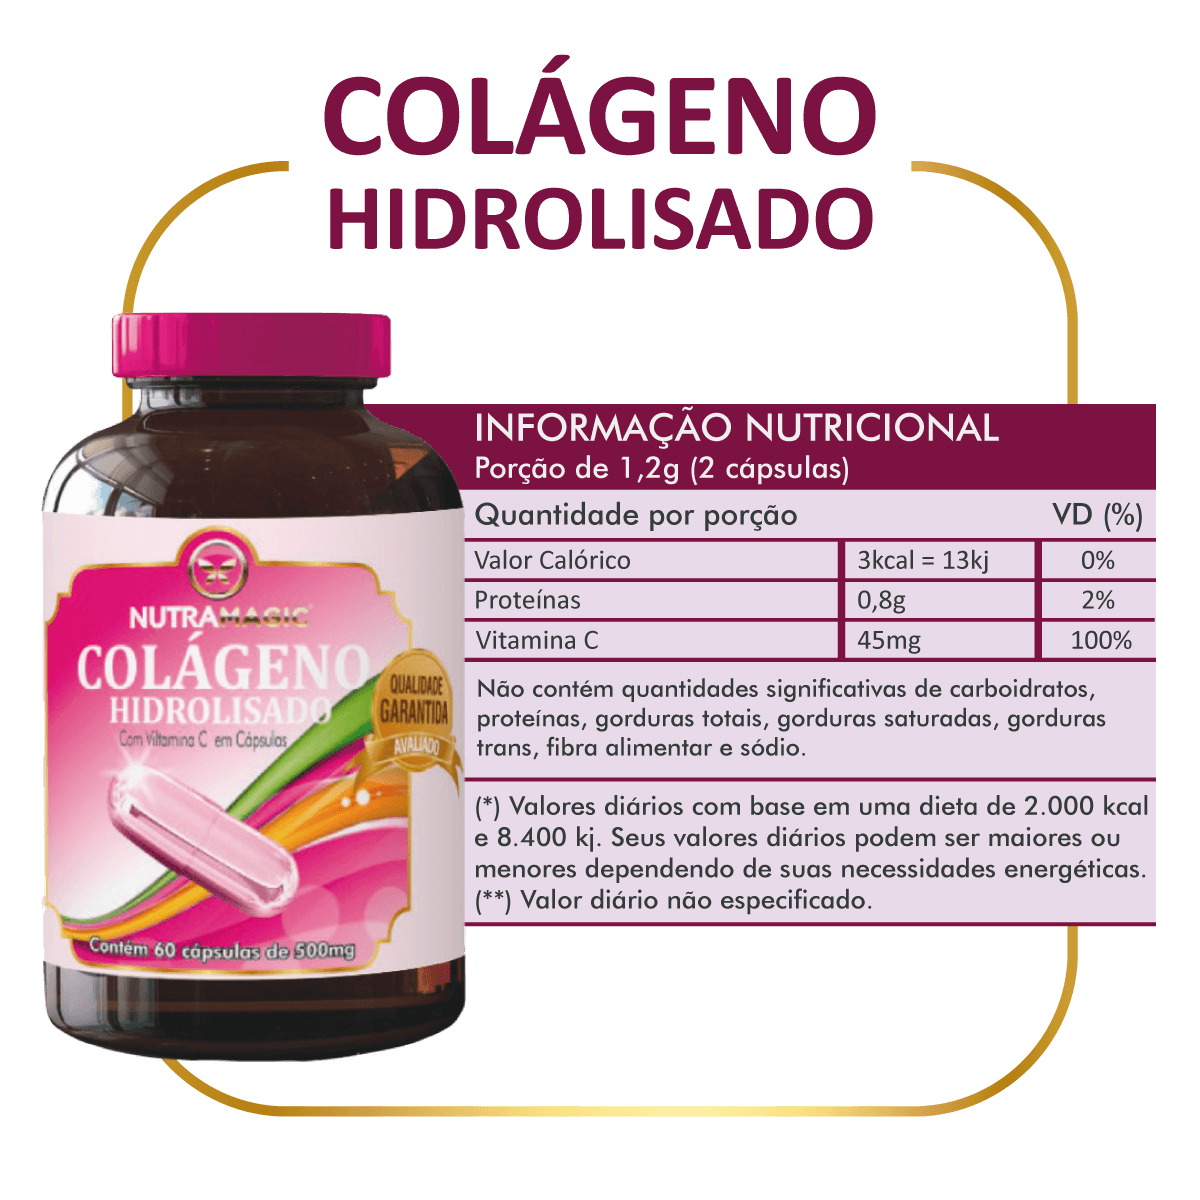 Colágeno Hidrolisado + Vitamina "C" Nutramagic - 60 Cápsulas de 500MG -  Nutramagic Suplementos e Vitaminas